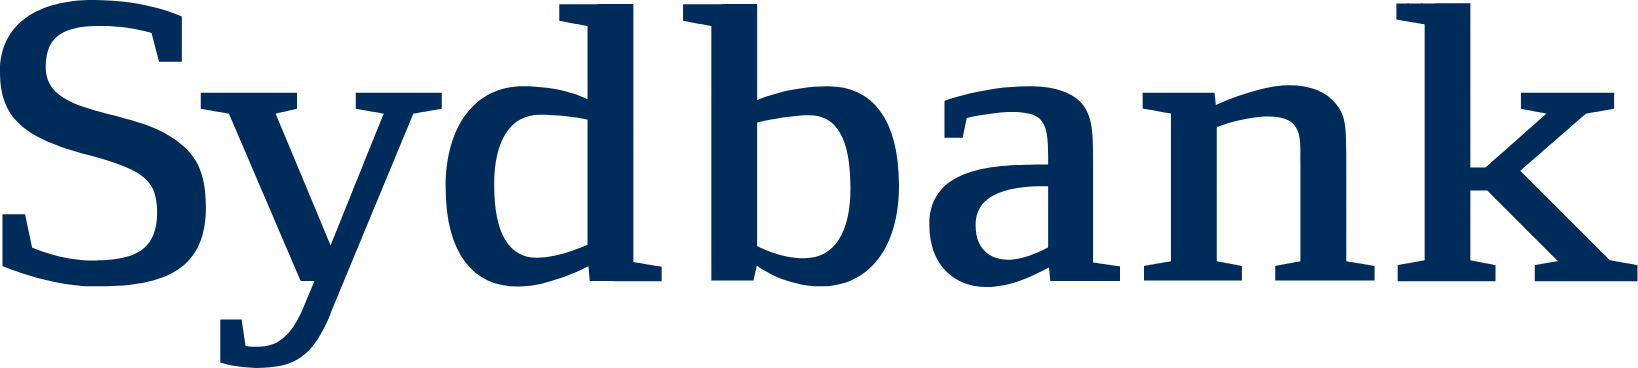 Sydbank A/S logo large (transparent PNG)